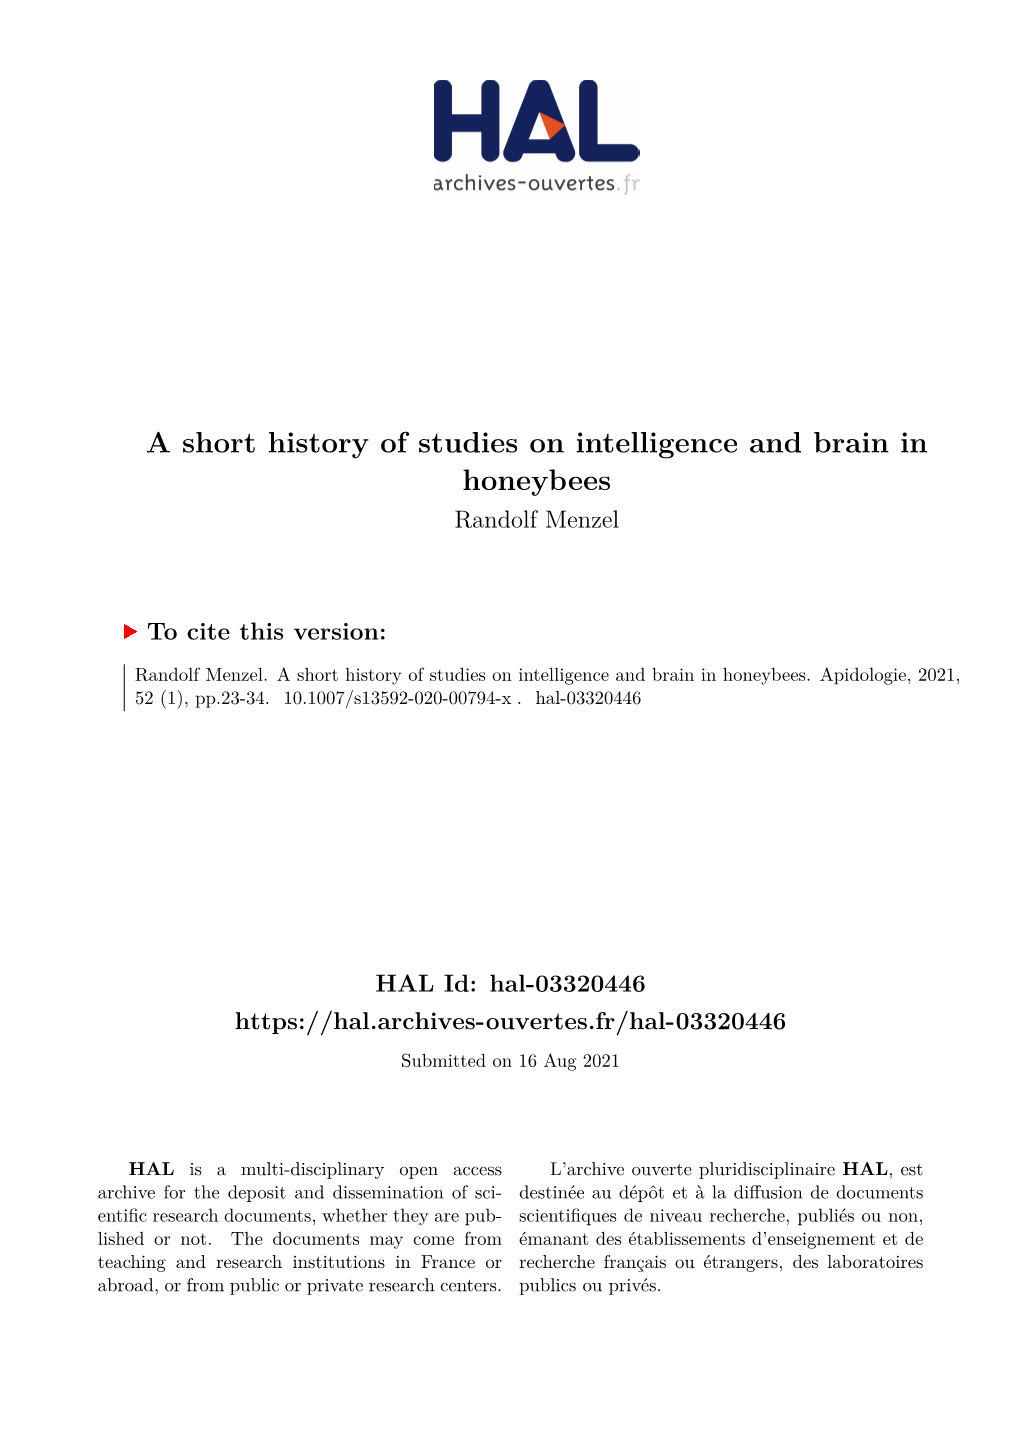 A Short History of Studies on Intelligence and Brain in Honeybees Randolf Menzel